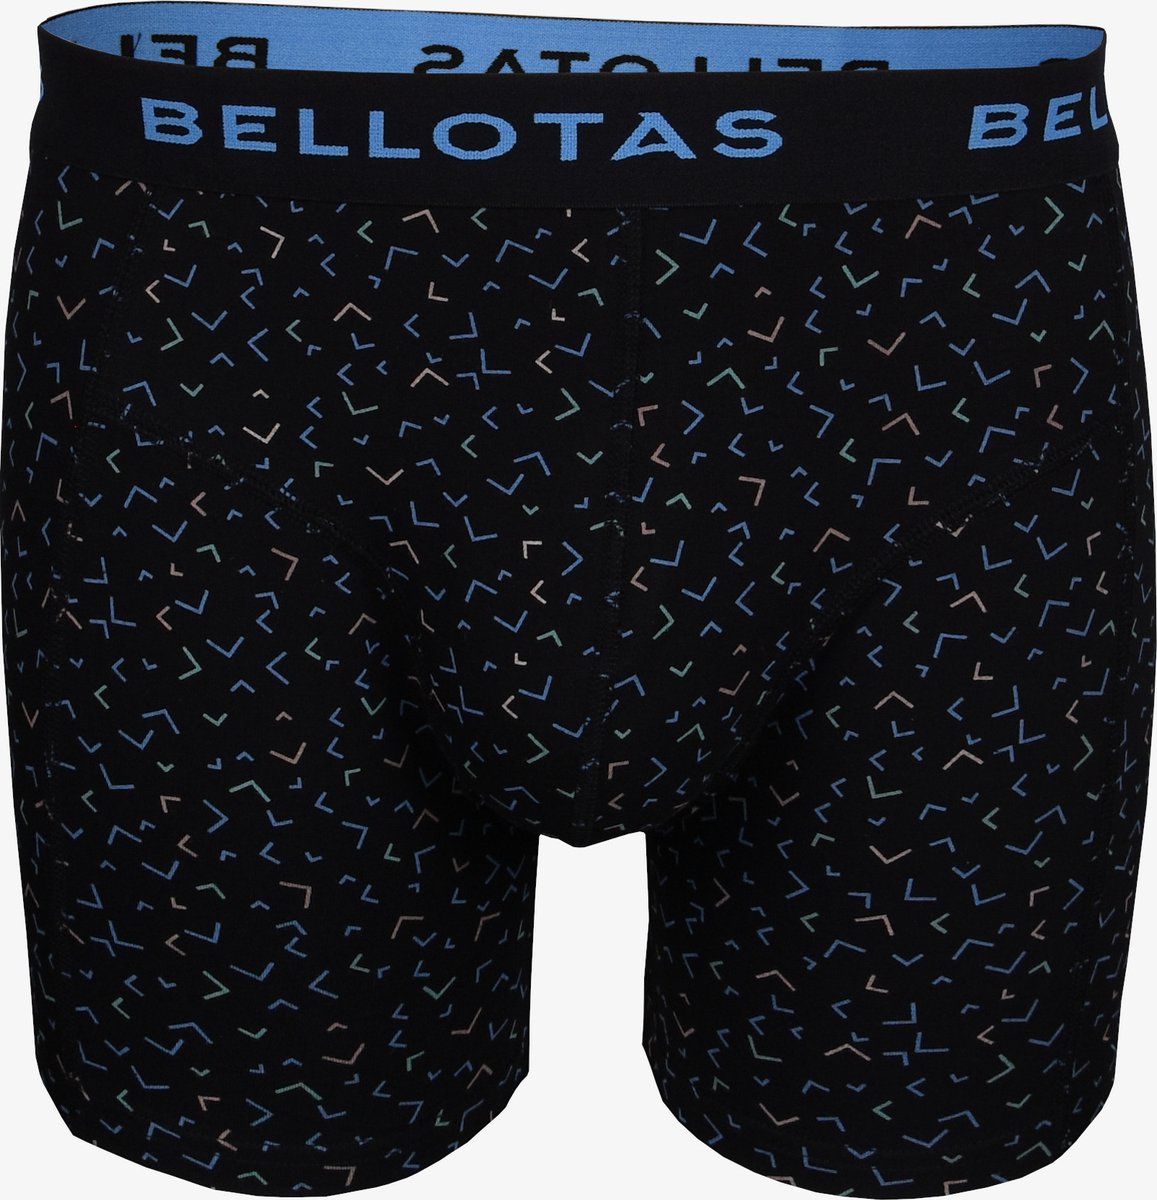 Bellotas - Boxershort - Gilles XXL